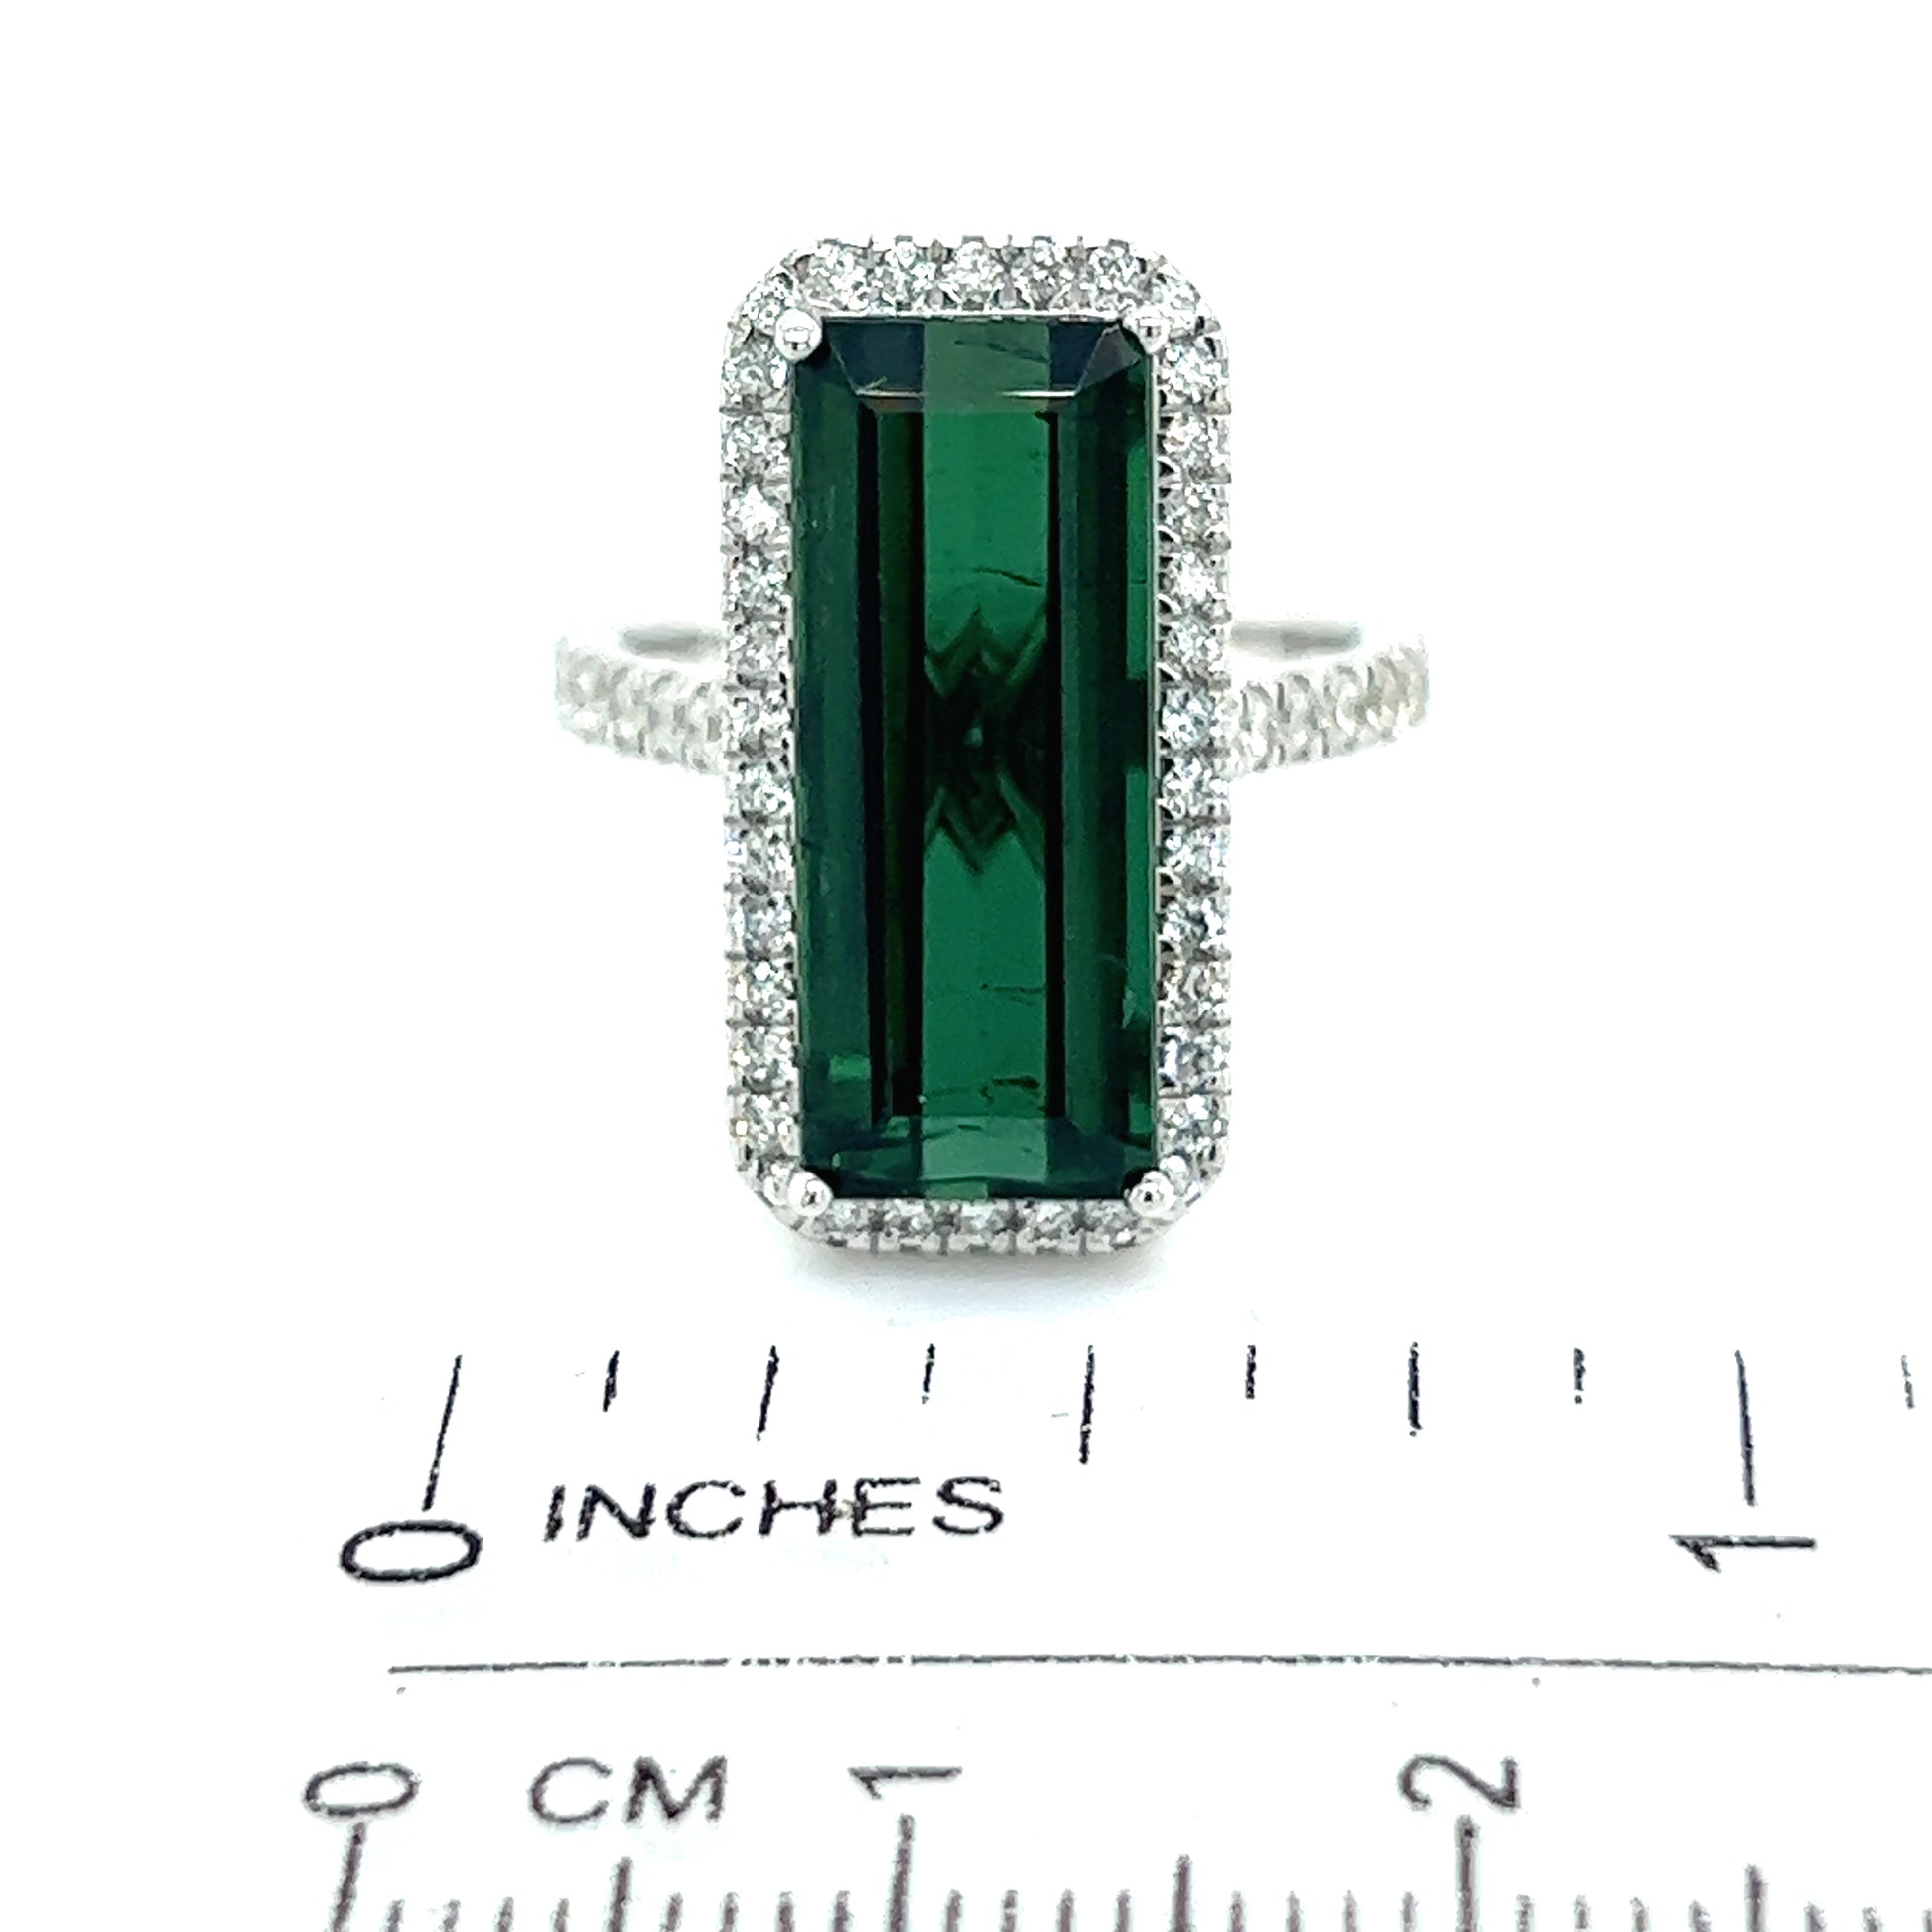 Natural Tourmaline Diamond Ring Size 6.25 14k W Gold 5.57 TCW Certified $5,975 216660 - Certified Fine Jewelry